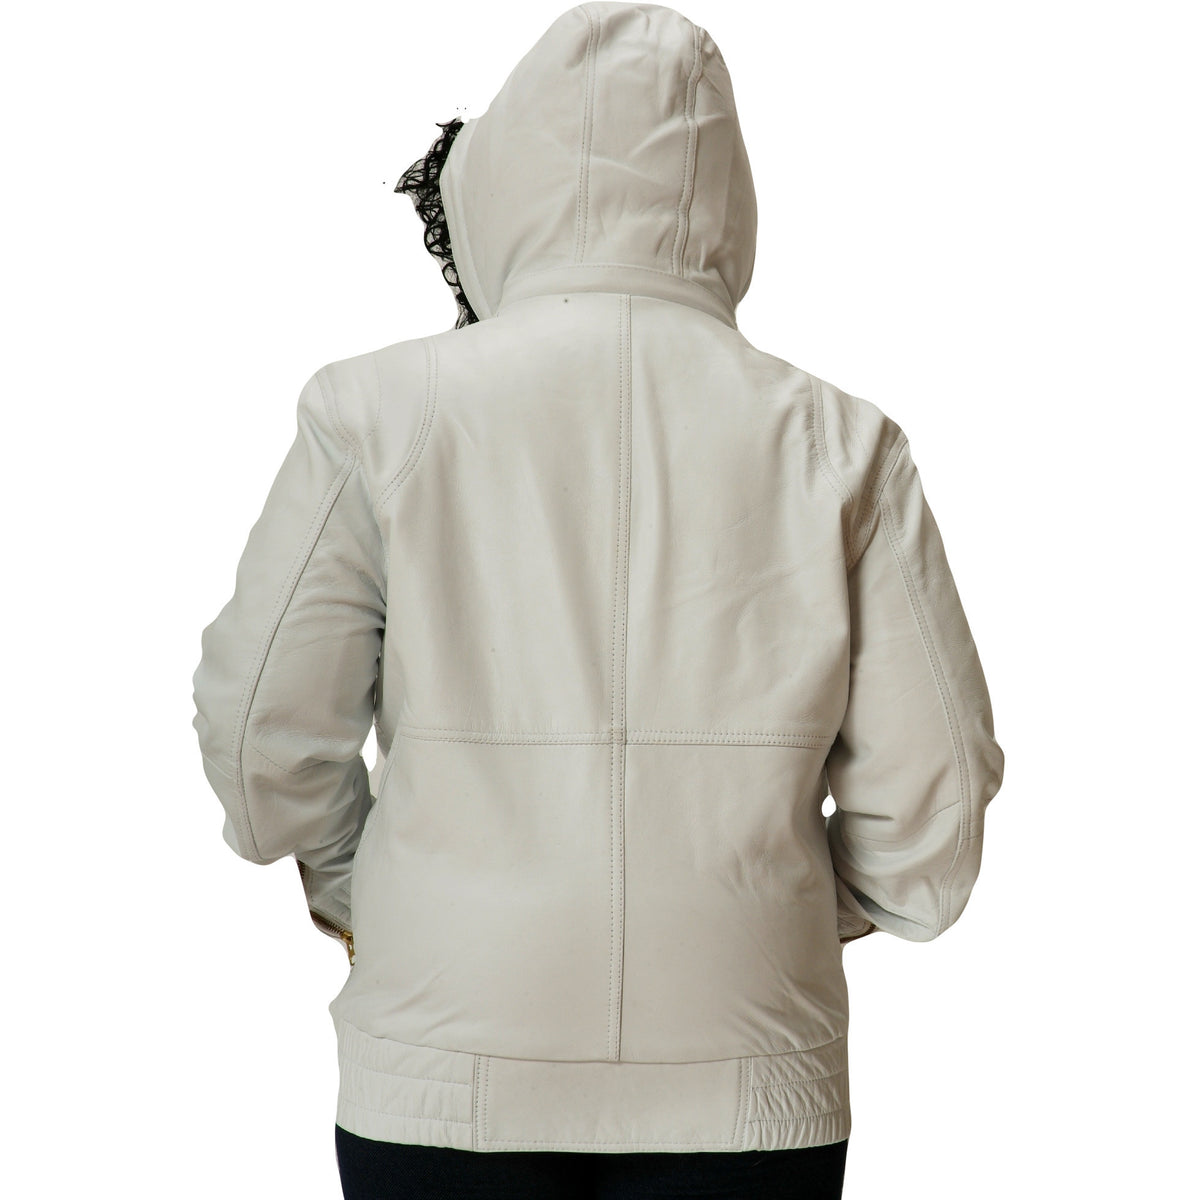 Womens white leather hooded jacket back 1